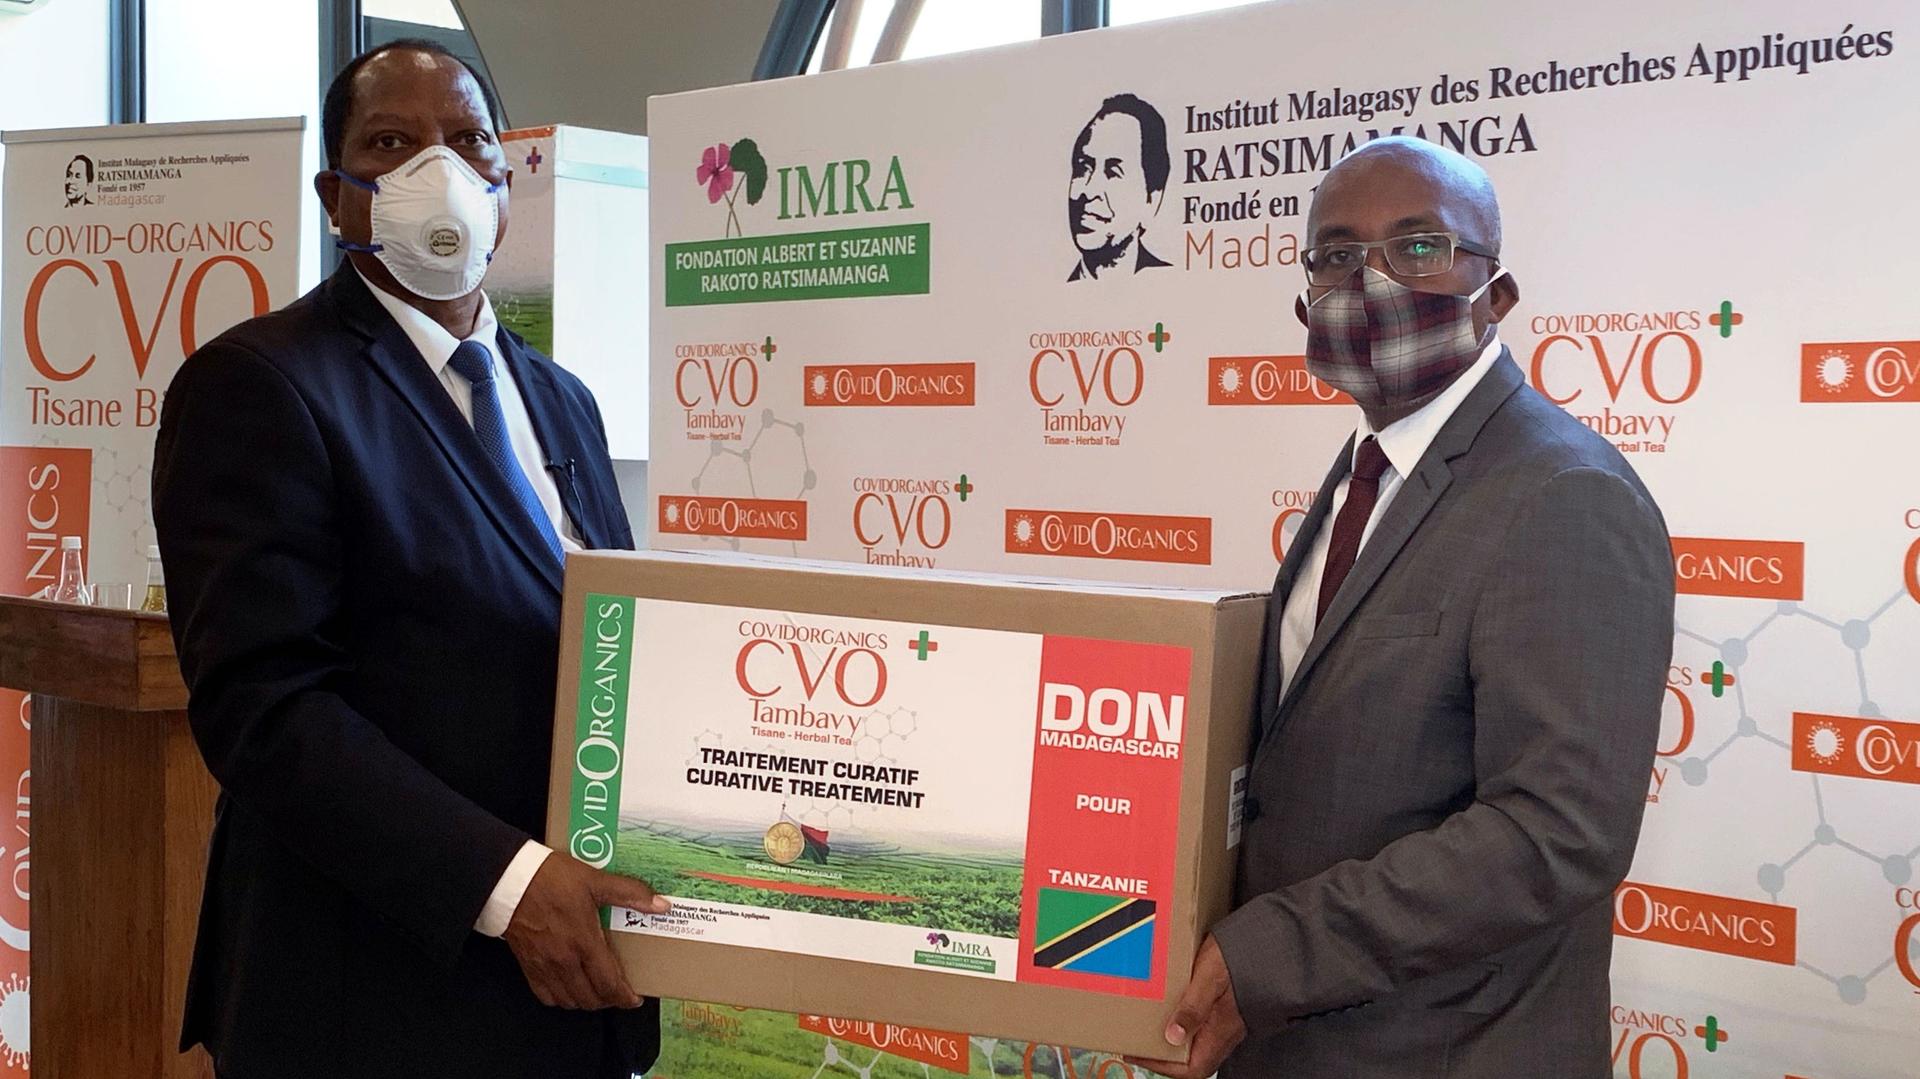 Palamagamba Kabudi, Tanzania's Foreign Minister receives a package from his Madagascar counterpart Tehindrazanarivelo Djacoba of the COVID Organics